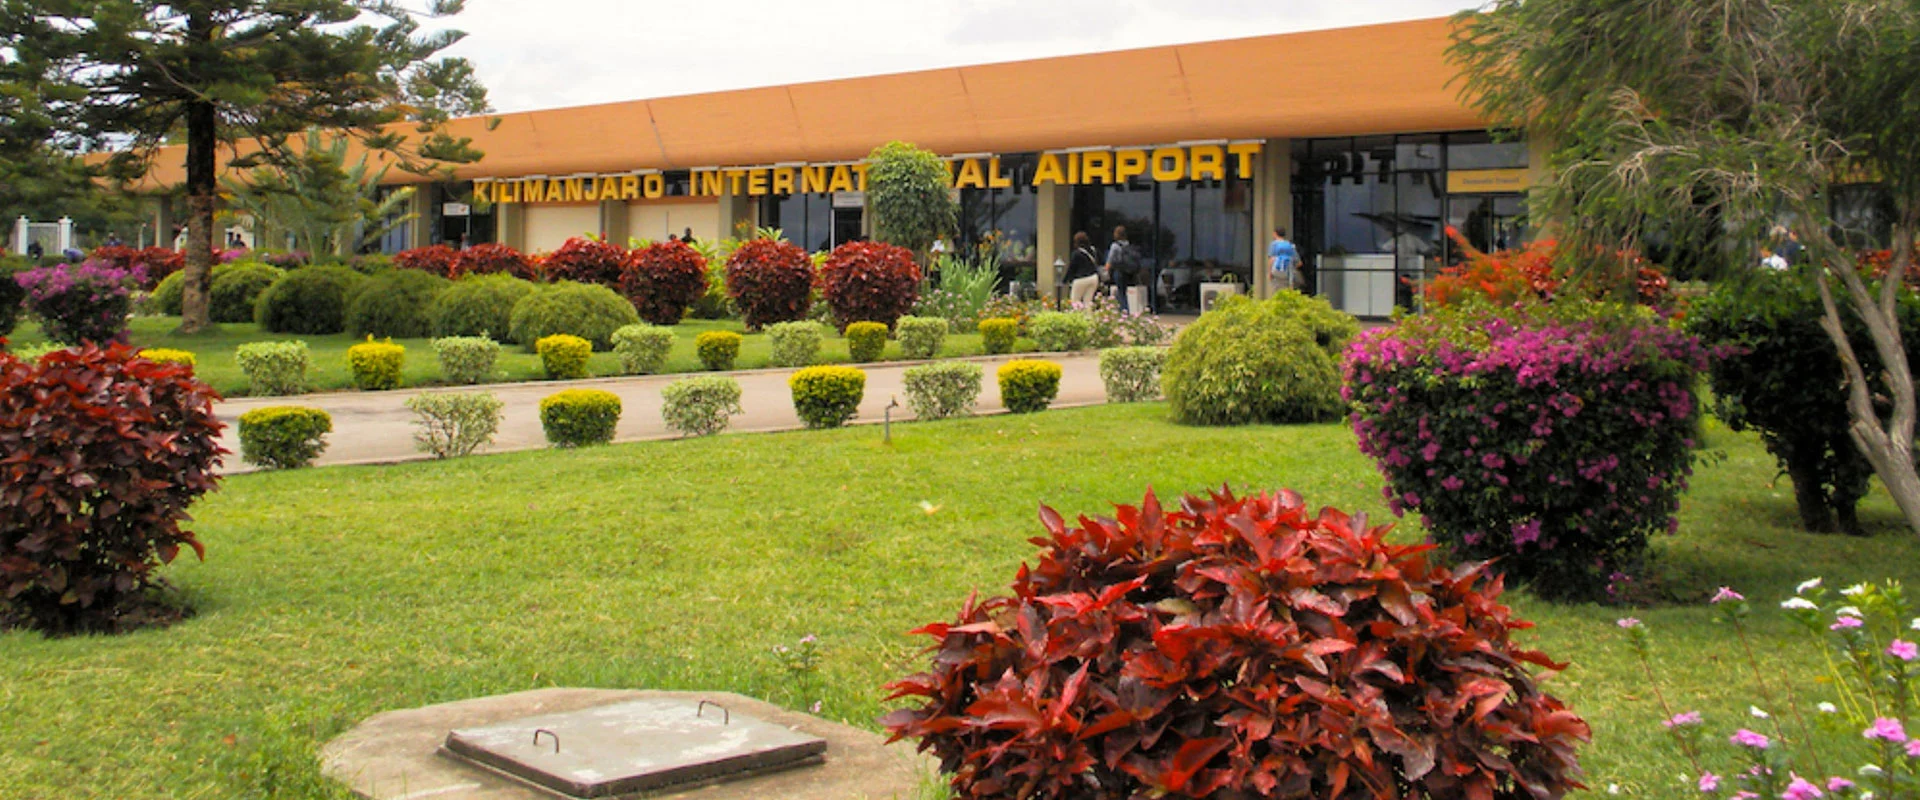 kilimanjaro-airport